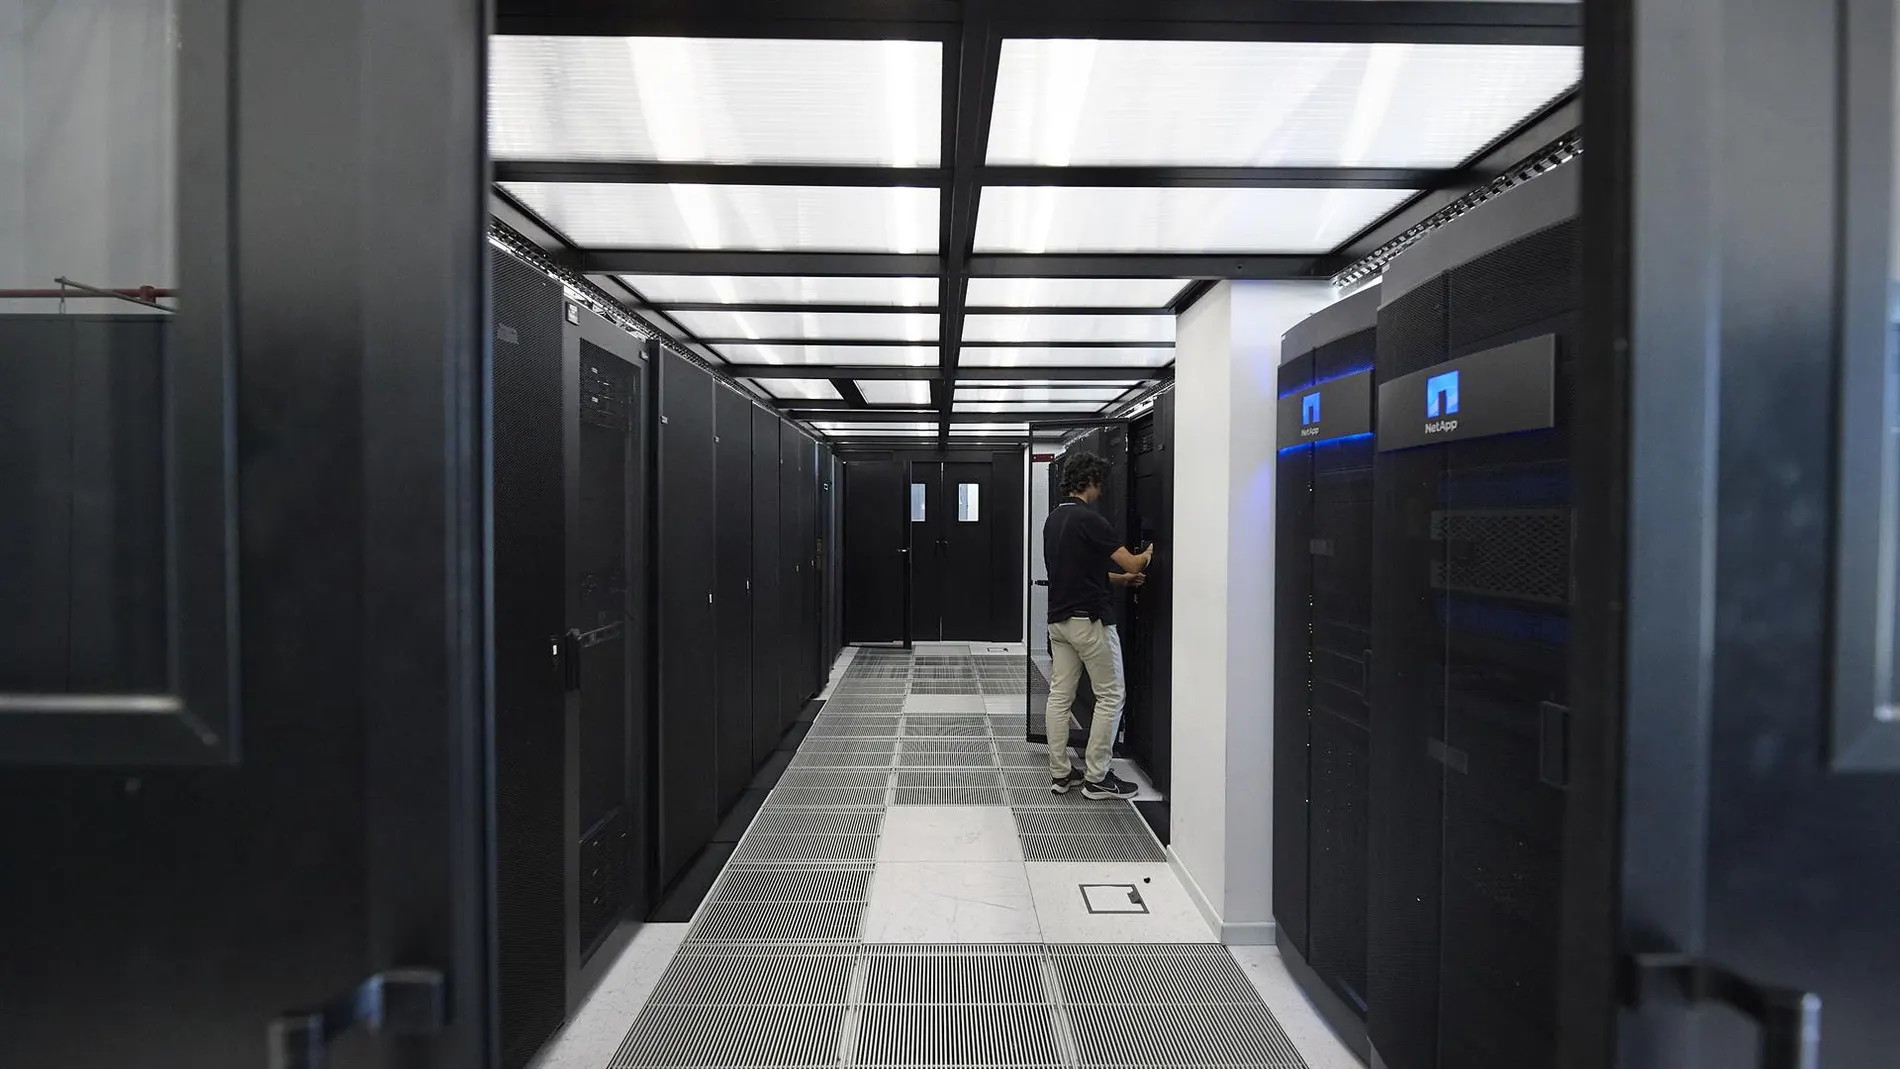 Los 27 acuerdan incorporar servicios de Inteligencia Artificial a supercomputadores europeos